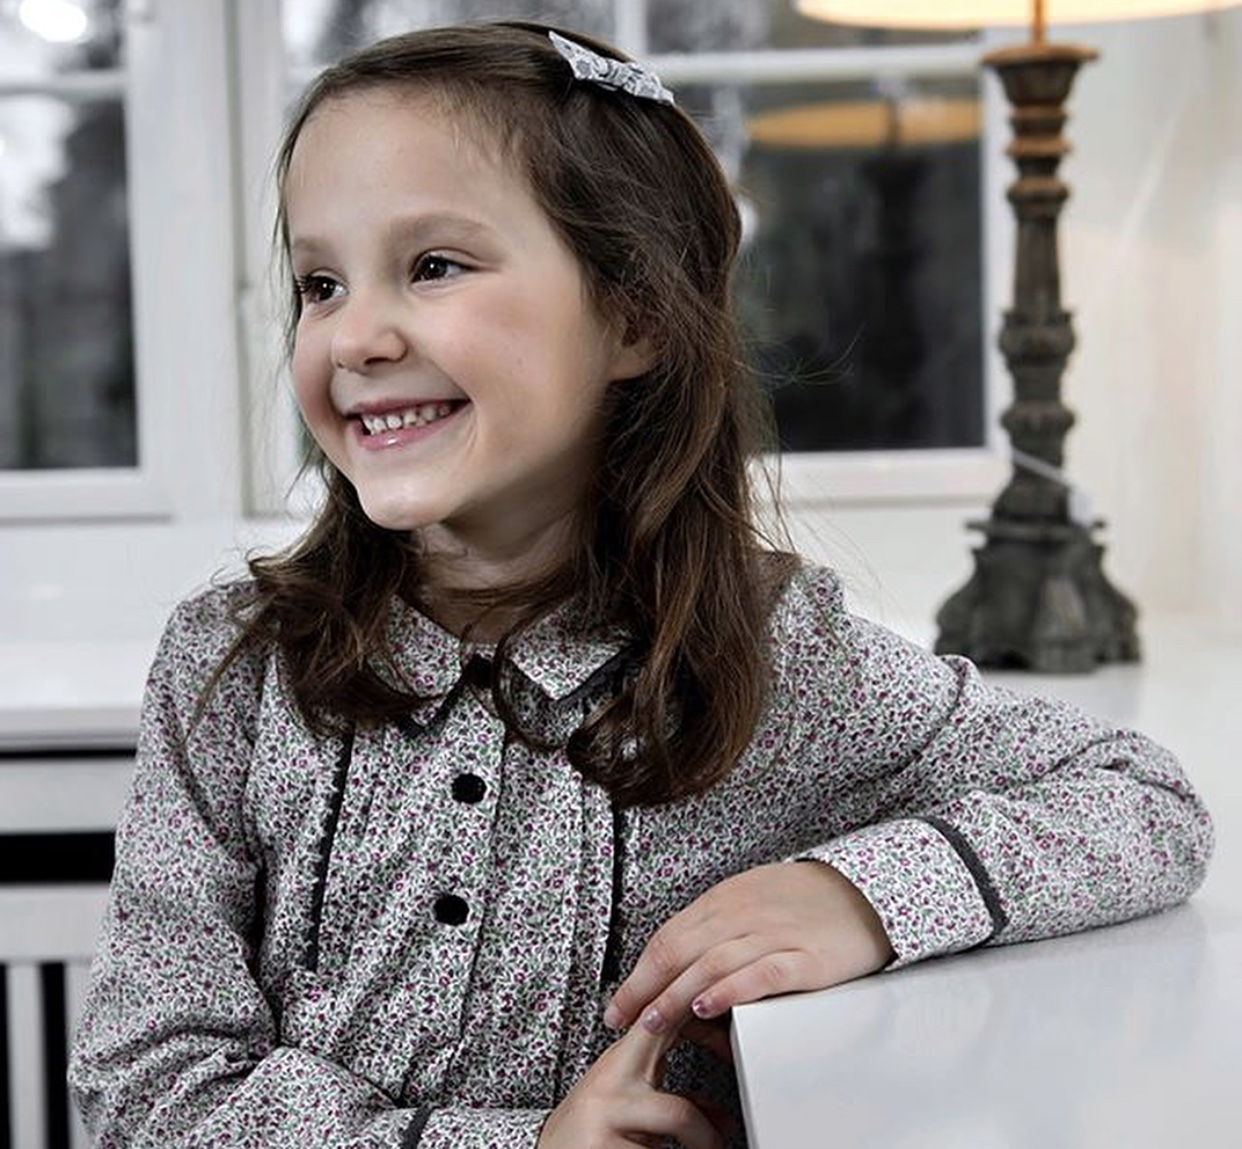 The Royal Children: Danish RF: Princess Athena's 6th birthday photo